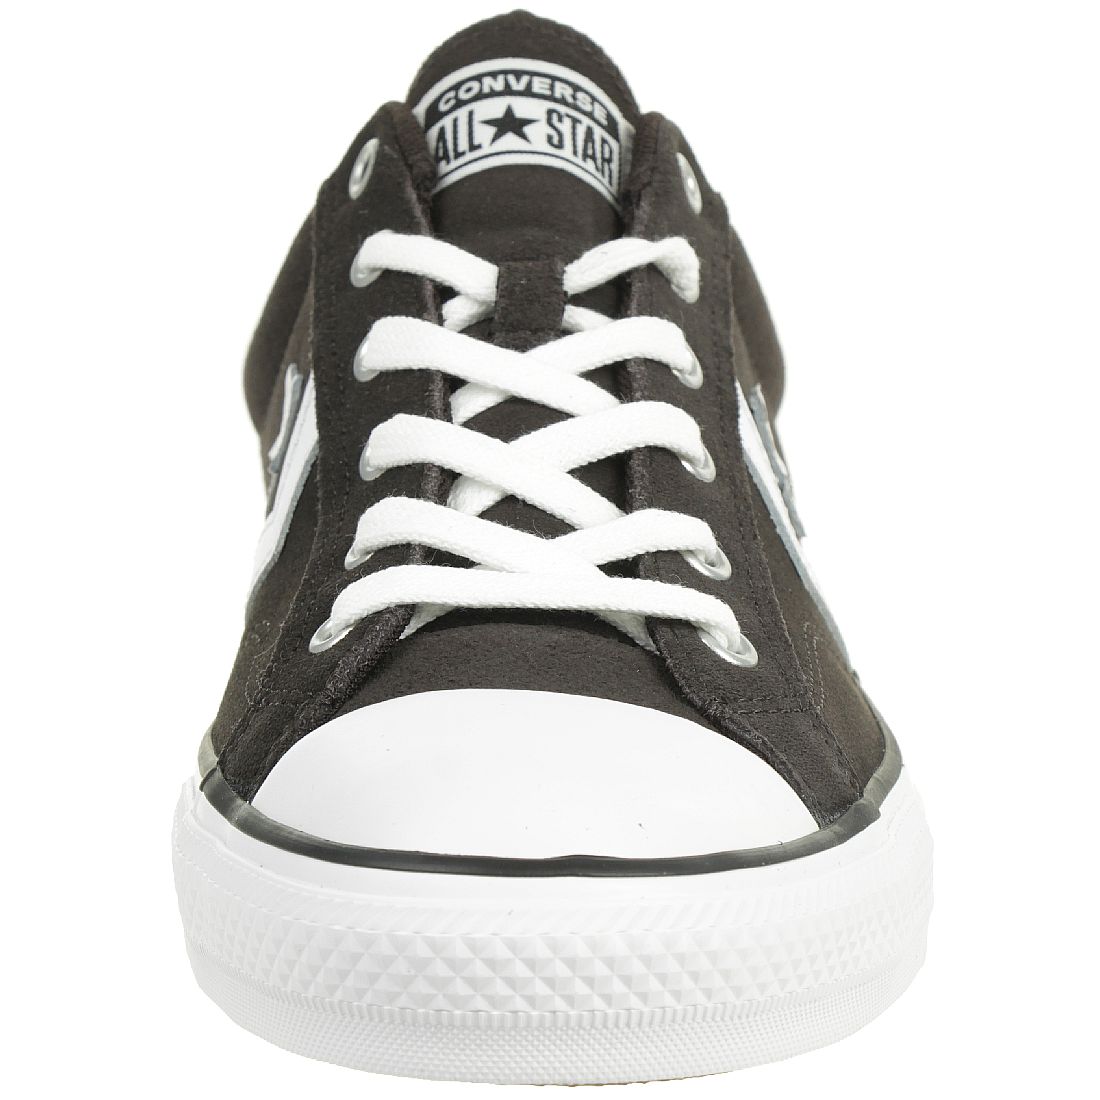 Converse STAR PLAYER OX Schuhe Sneaker Wildleder braun 165464C